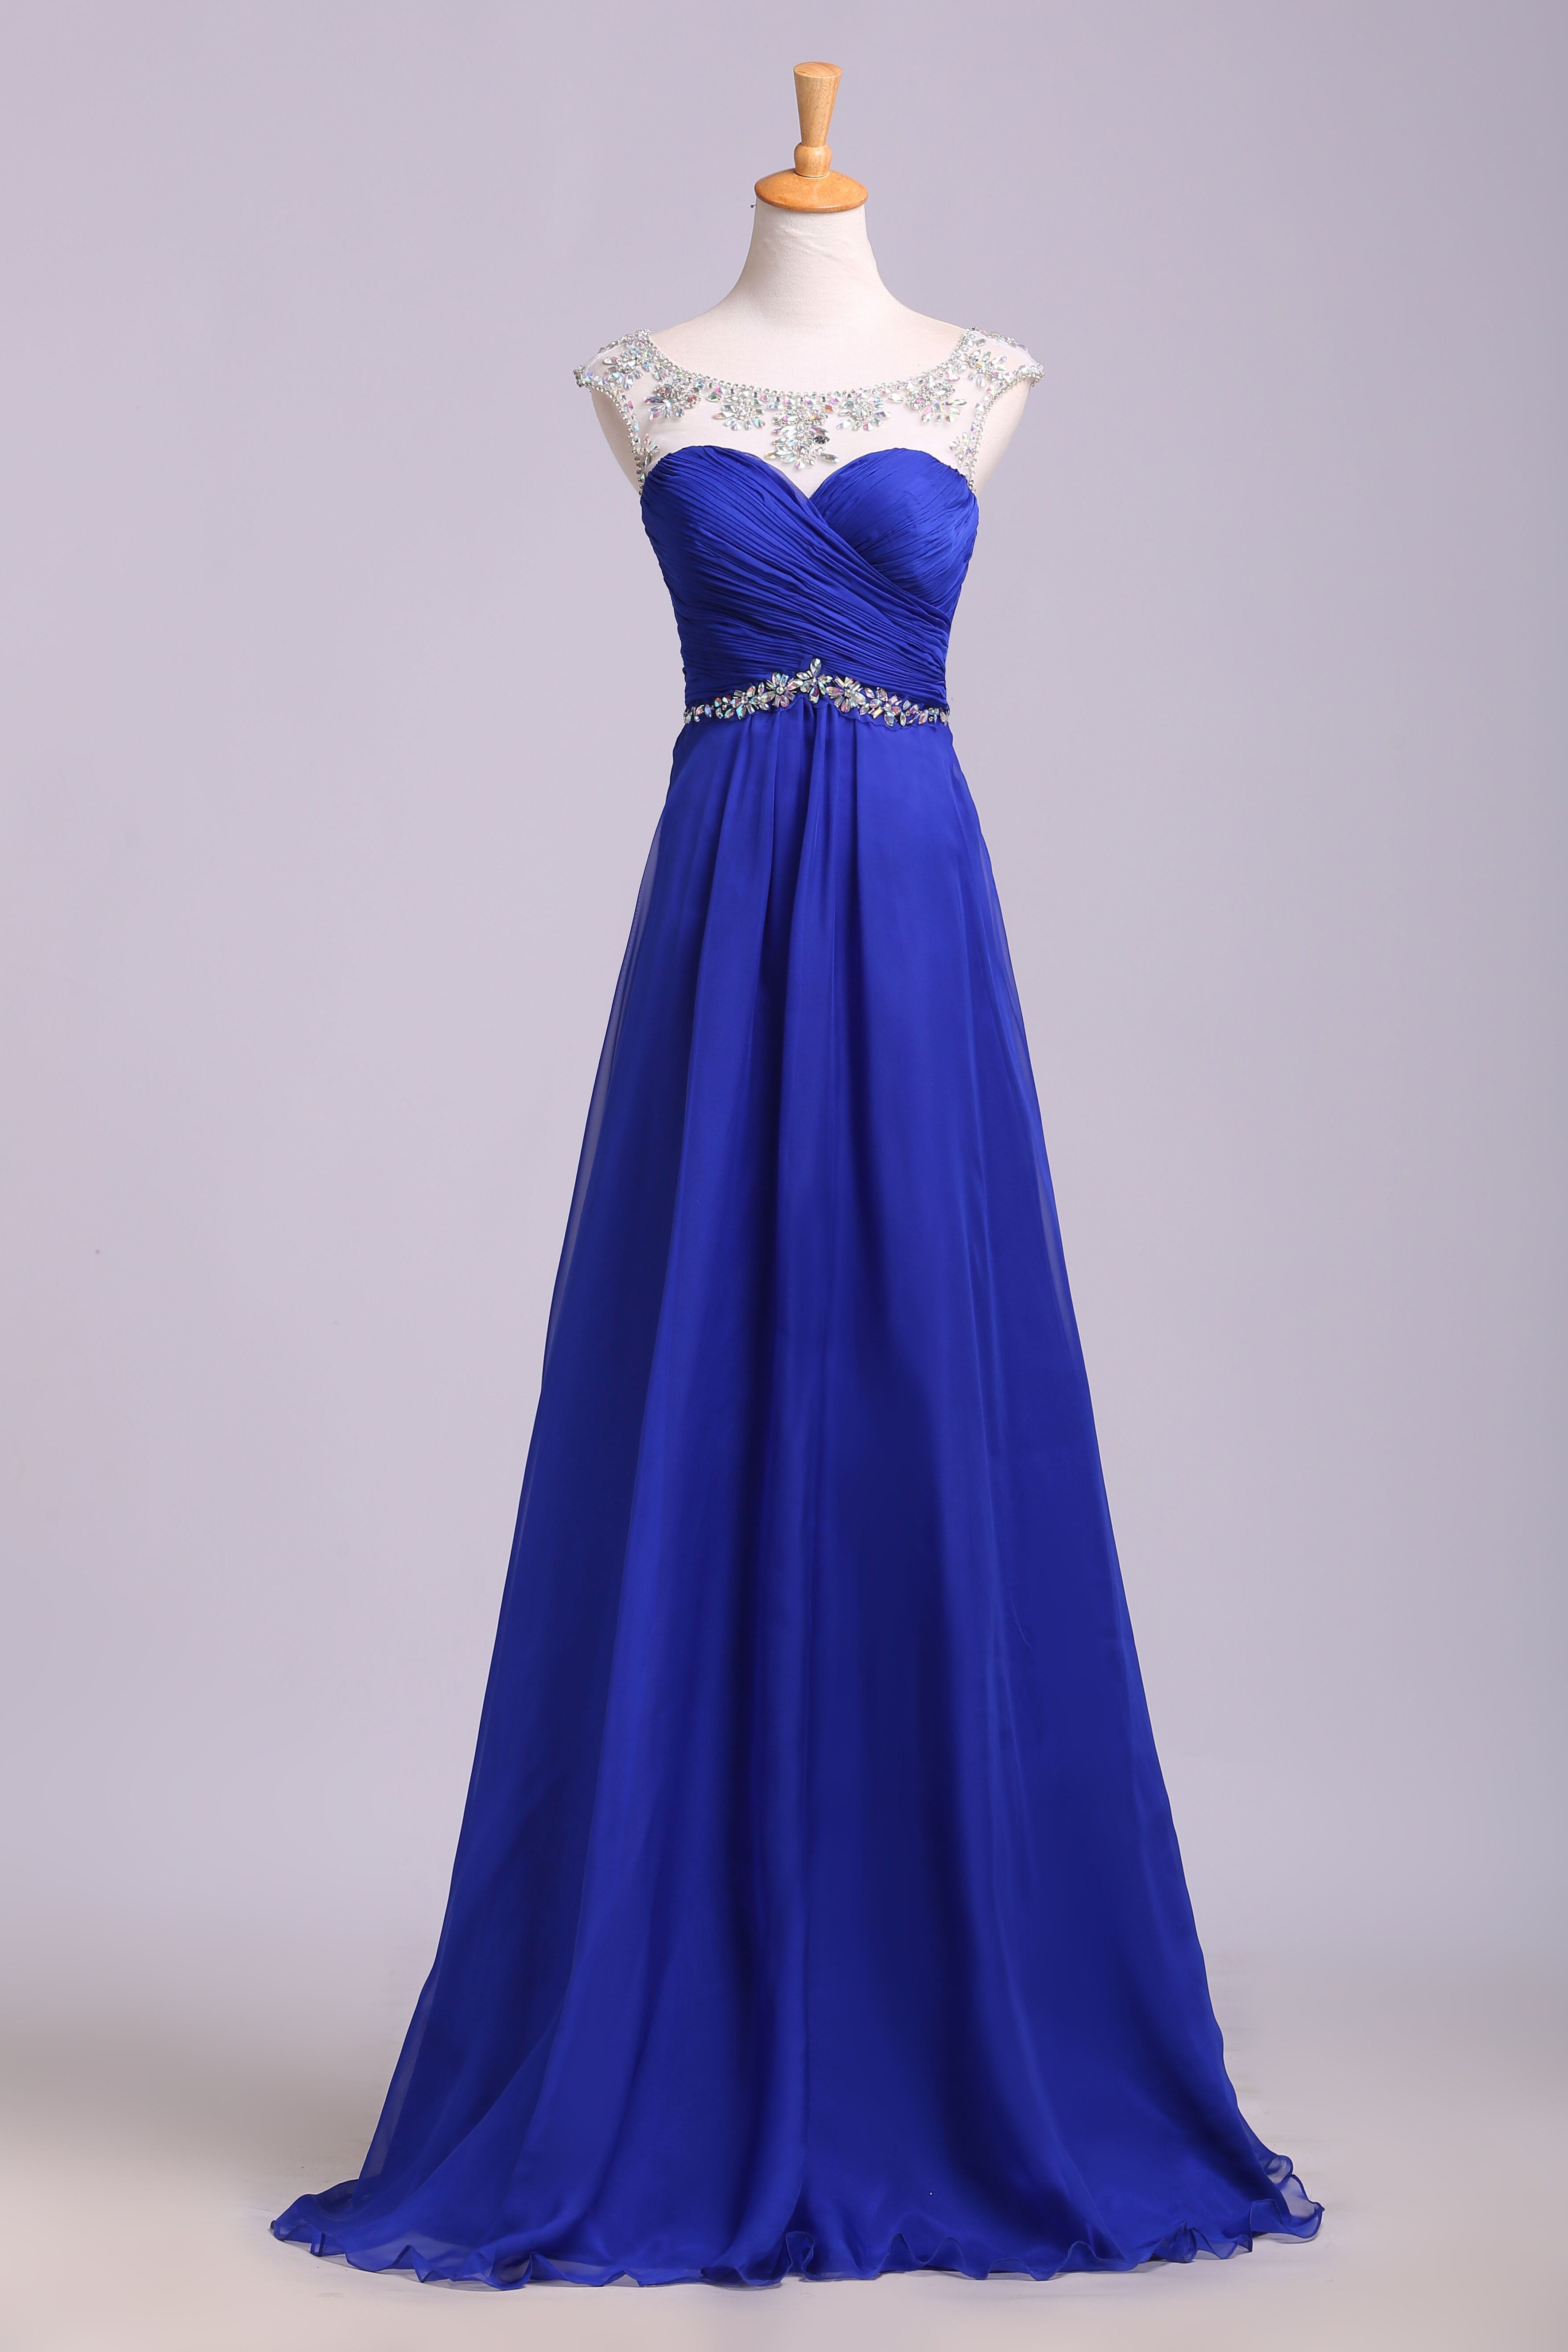 Royal Blue Floor Length Chiffon Prom Dress with Rhinestone Belt, Eveni ...